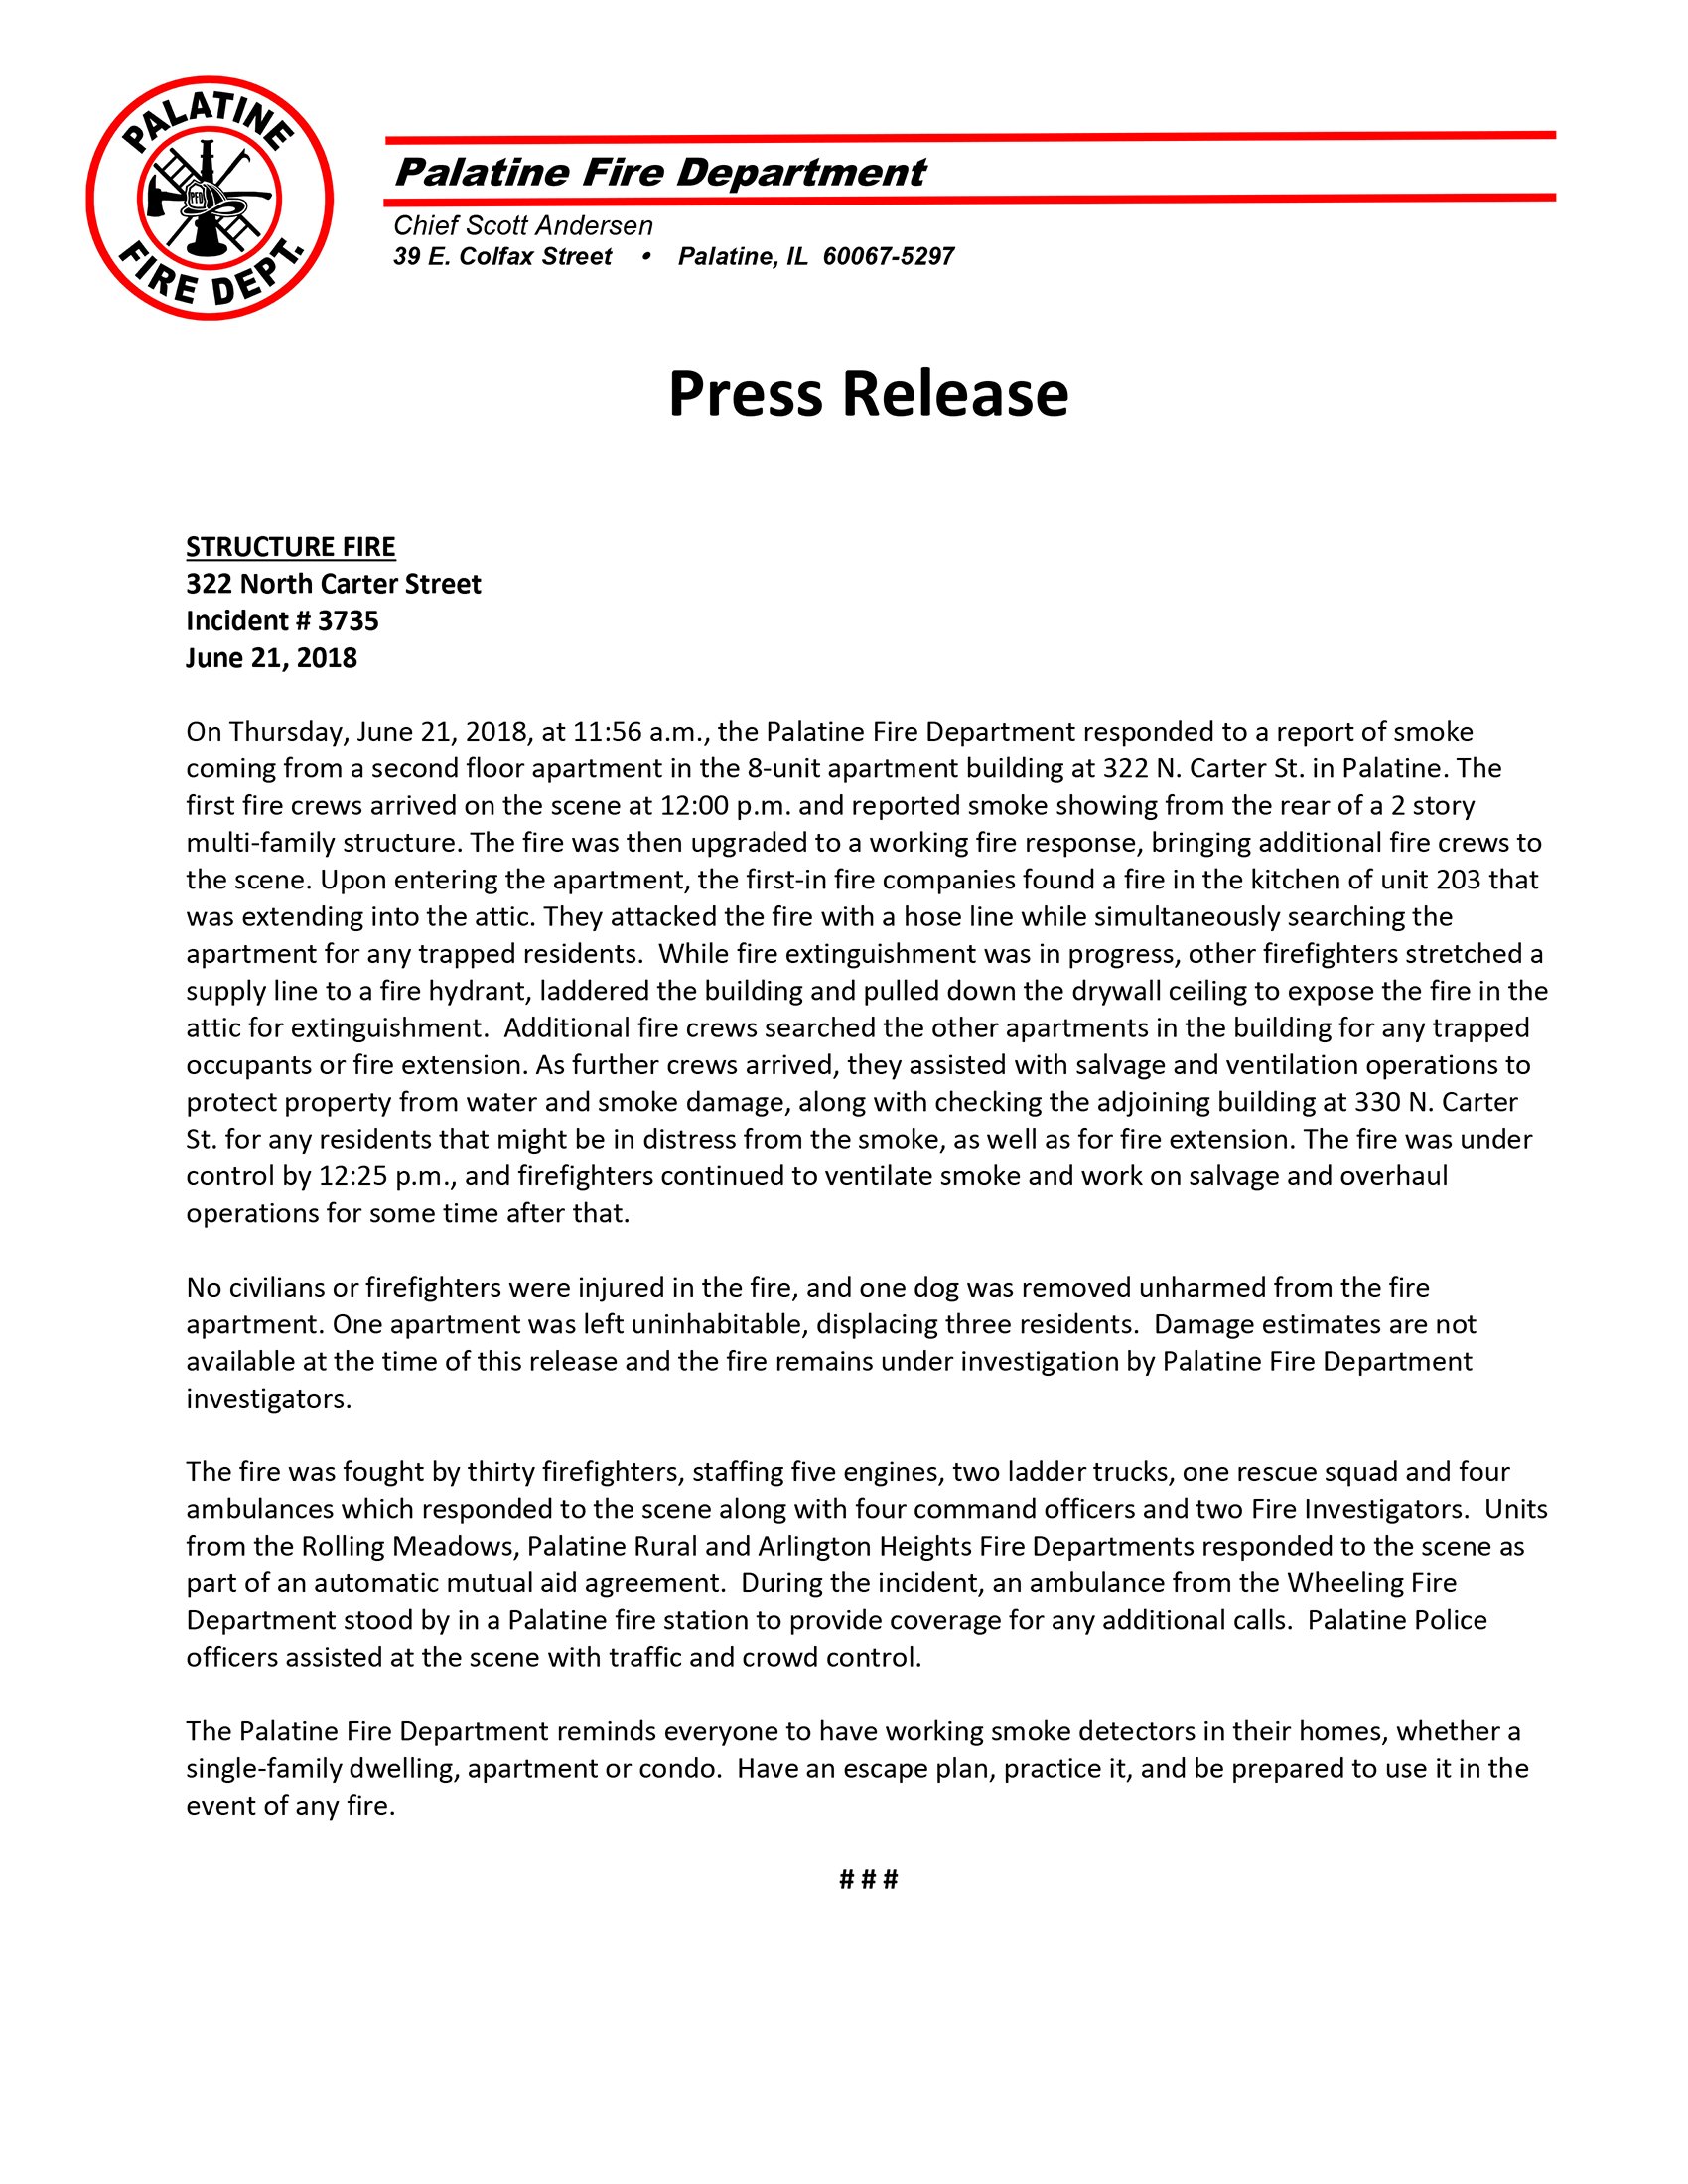 Palatine Fire Department press release